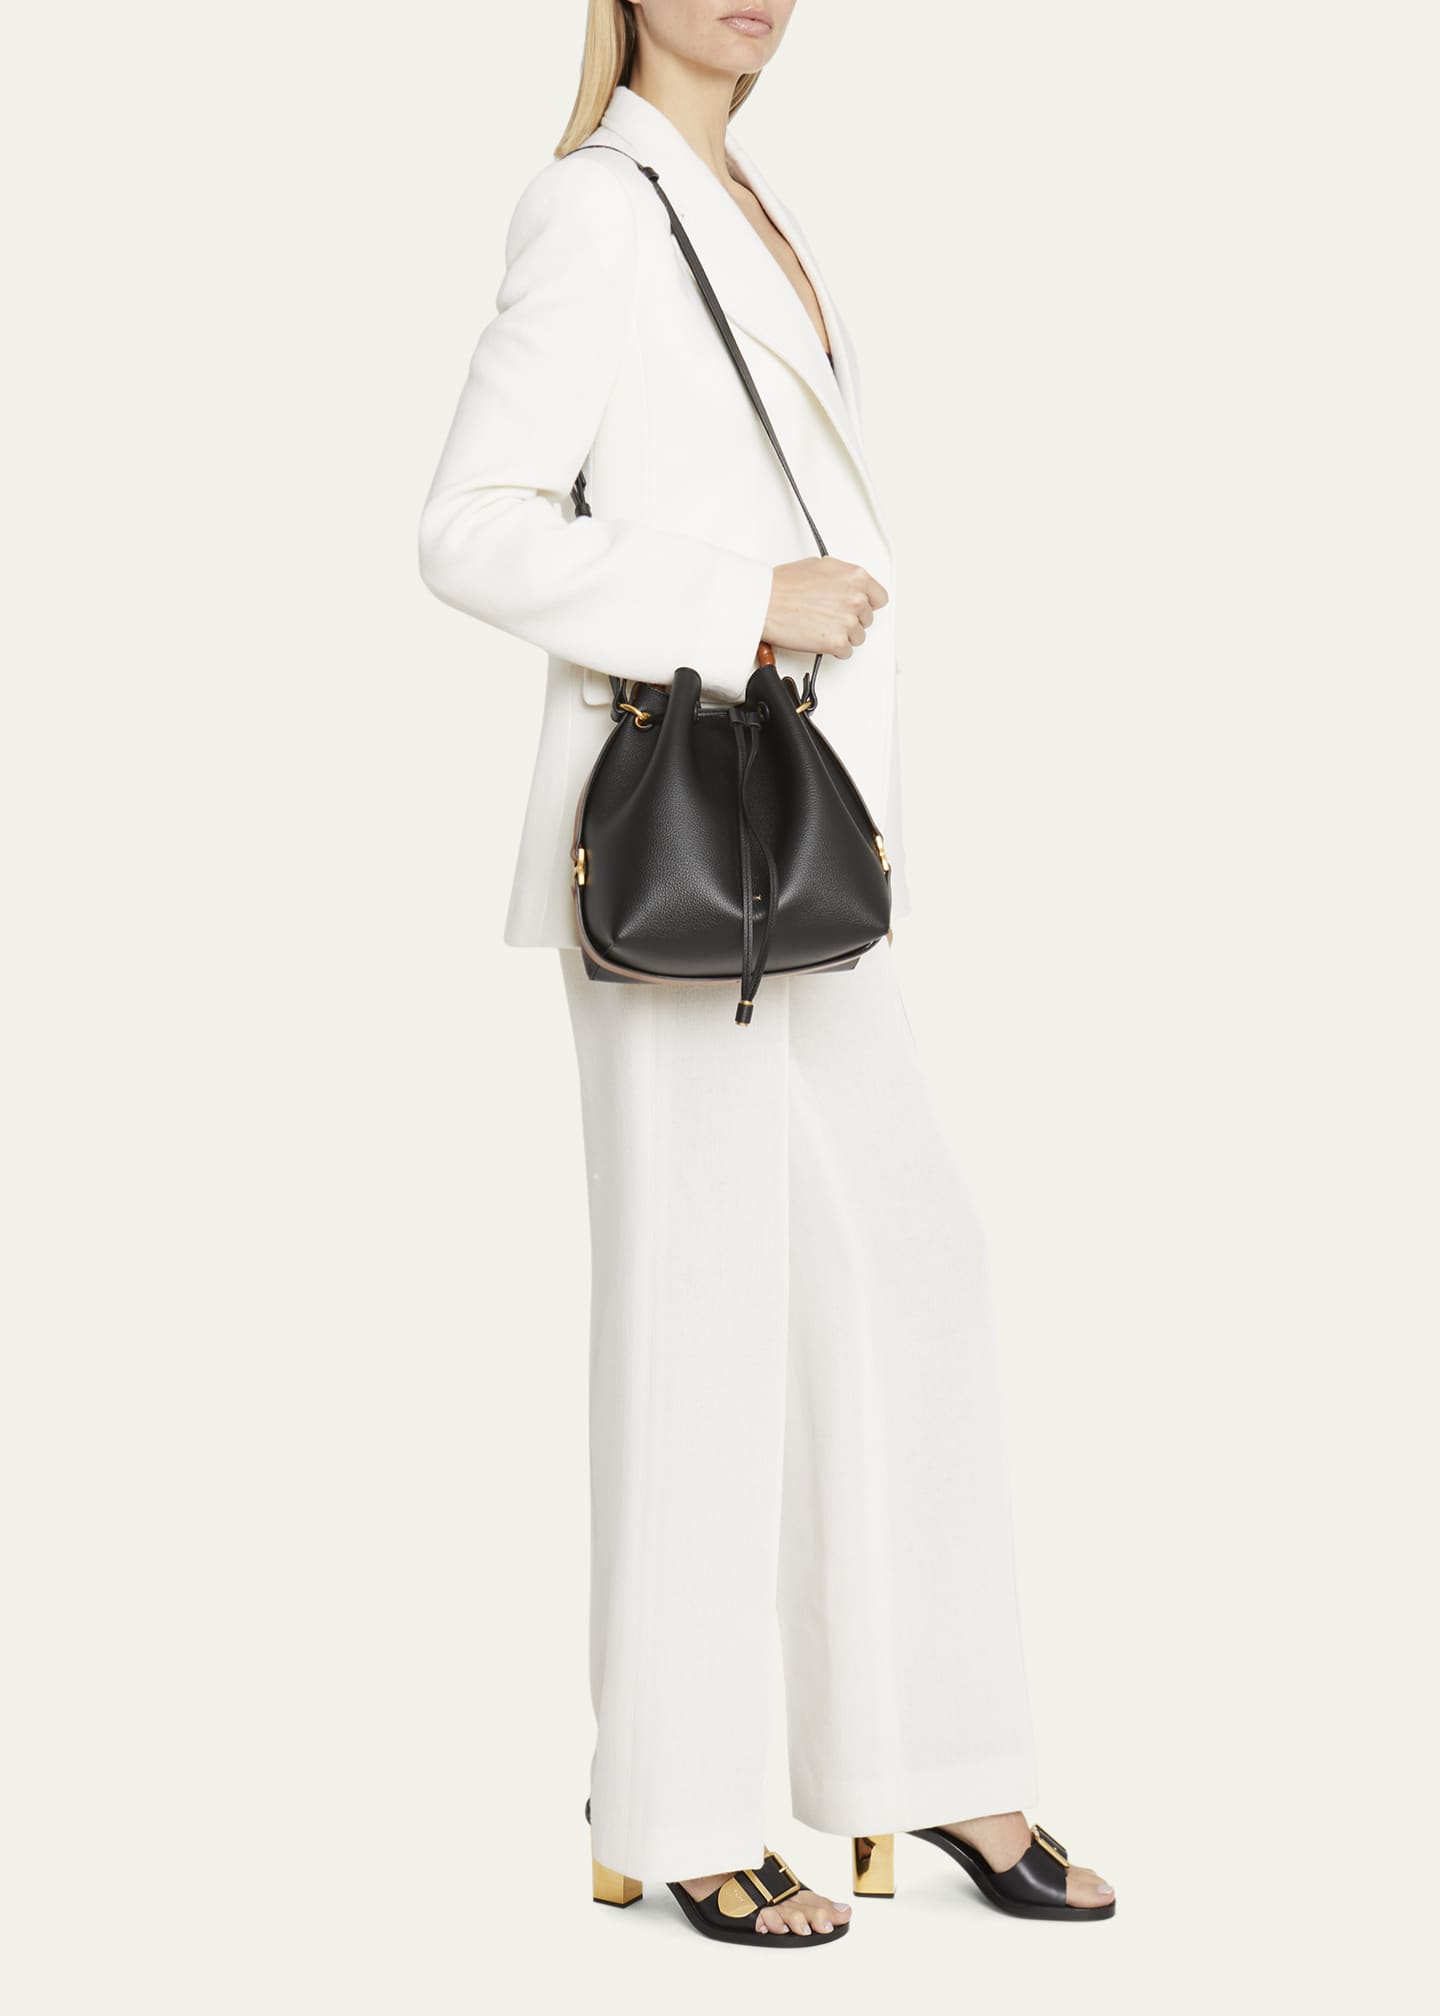 Chloe Marcie Bucket Bag in Grained Leather - Bergdorf Goodman